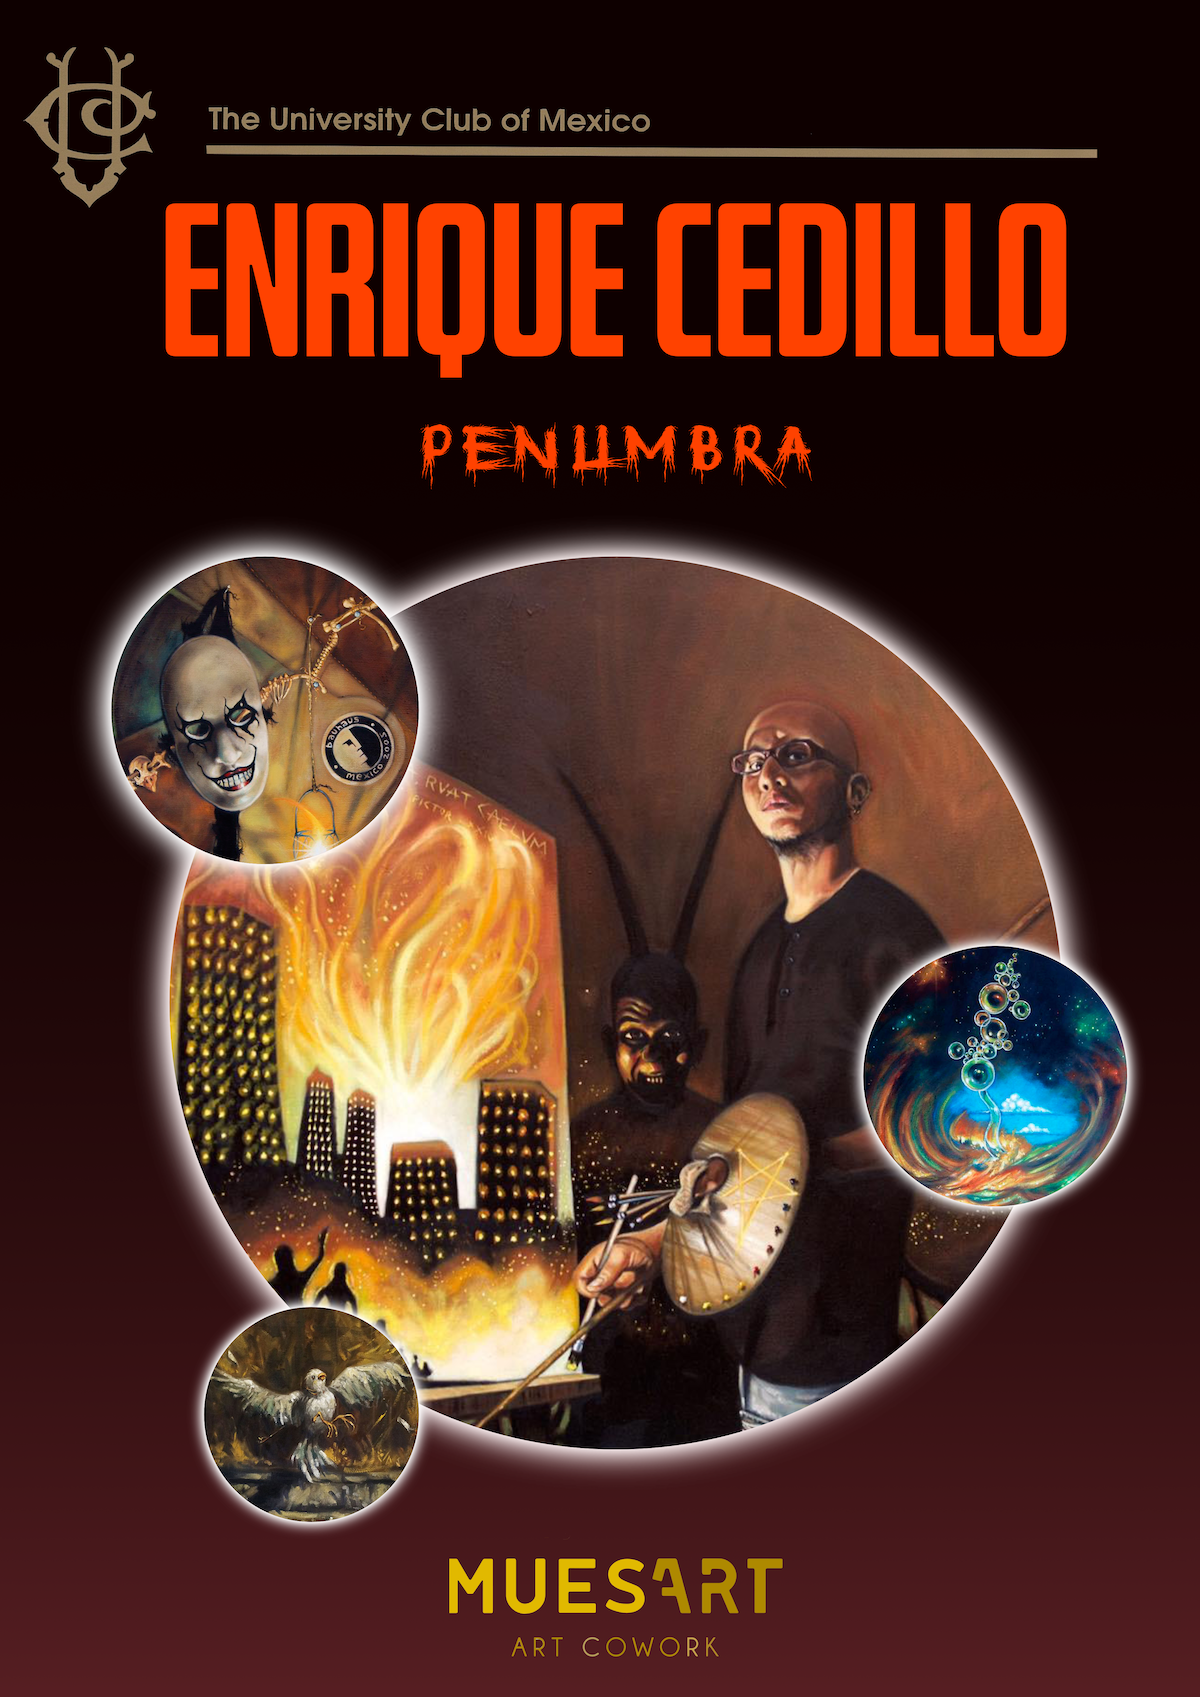 Enrique Cedillo 2019 NO TEXT.png